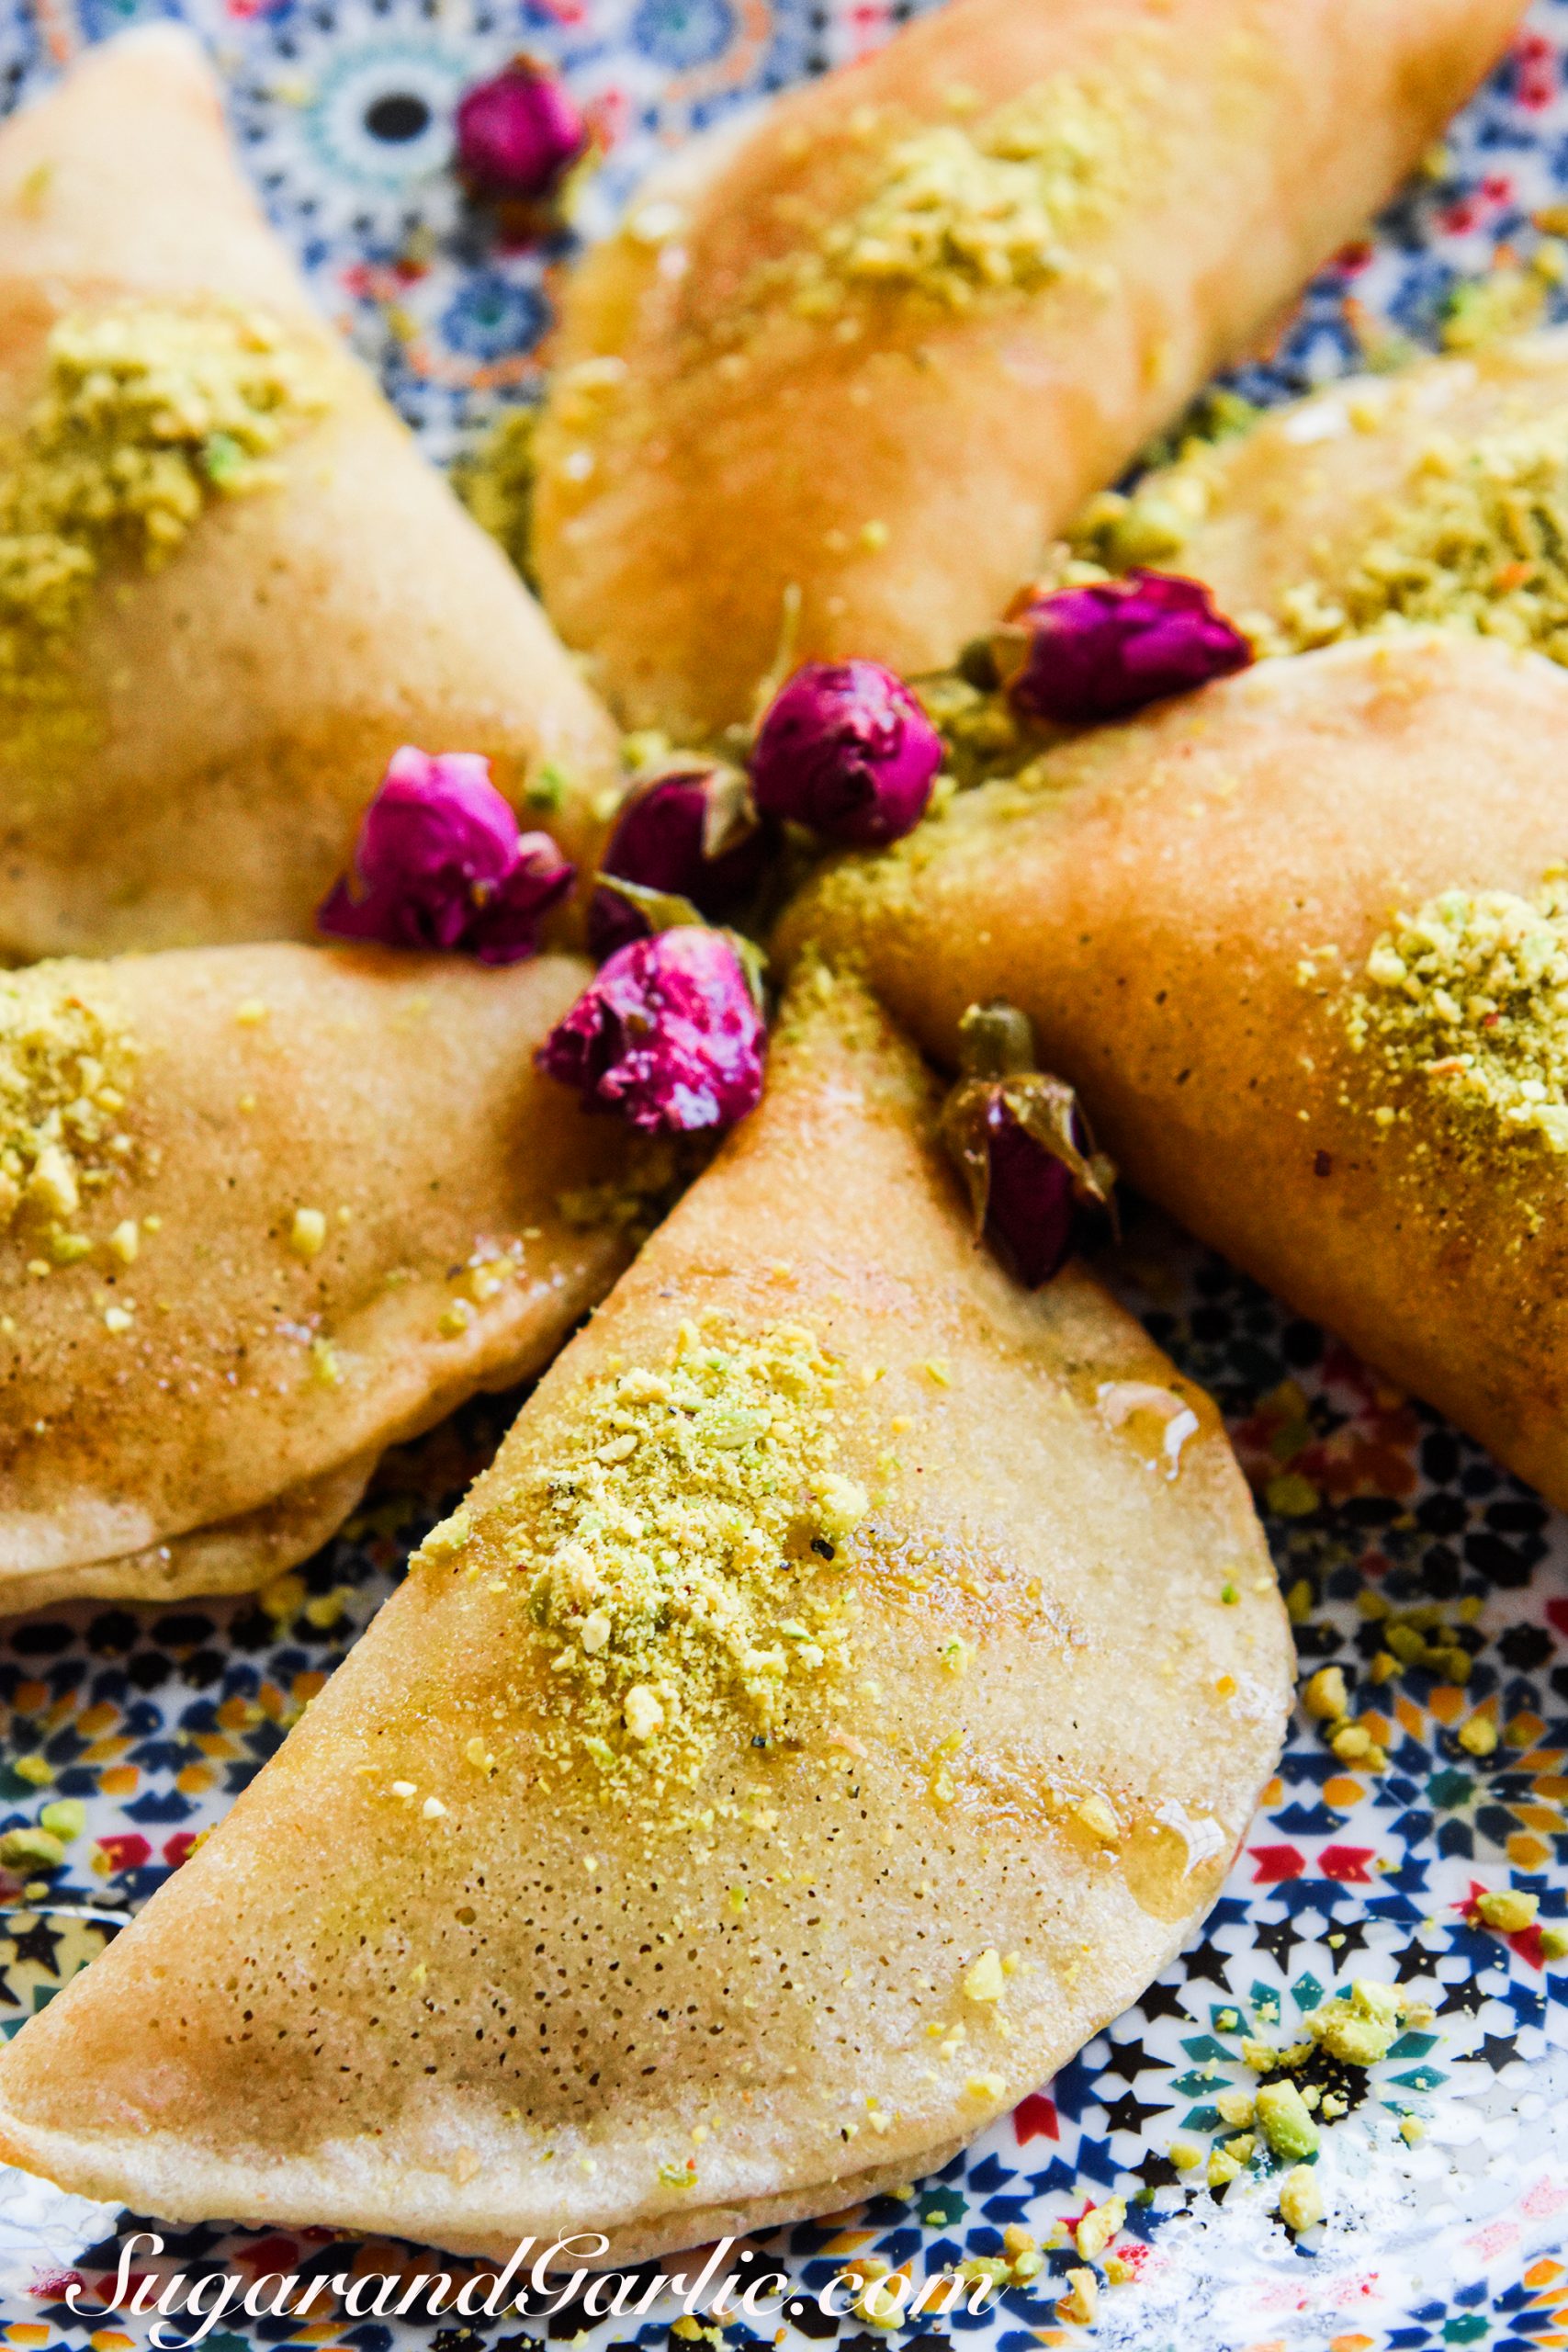 Qatayif with pistachio and rose